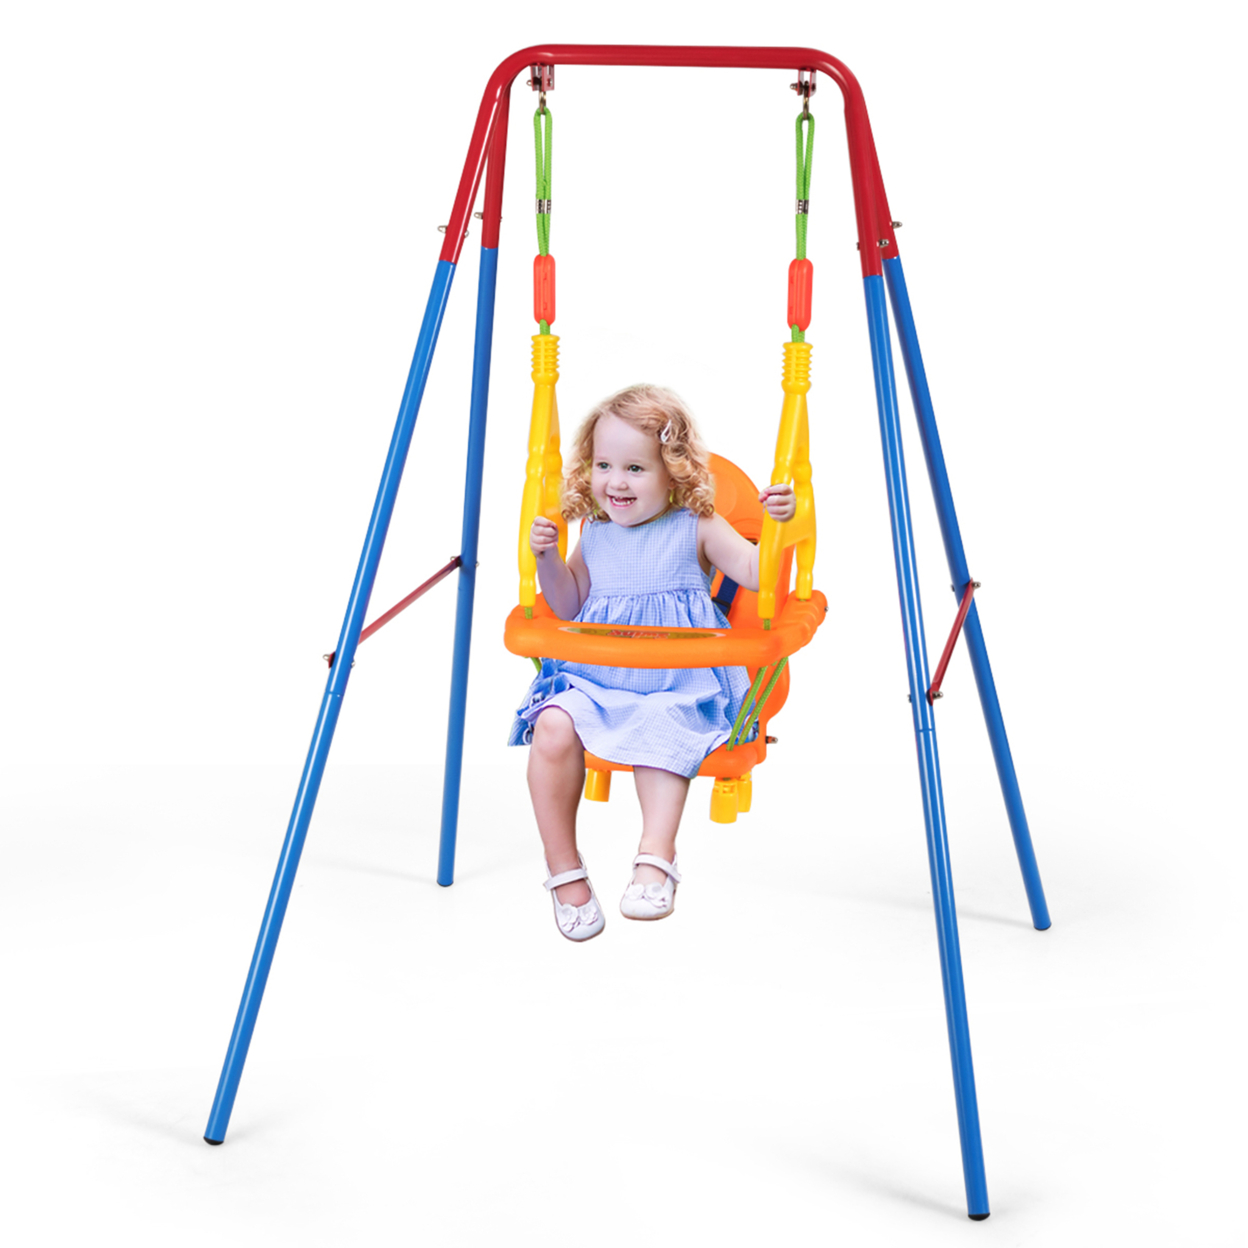 Toddler Swing Set High Back Seat W/ Handrails A-Frame Metal Swing Set Backyard